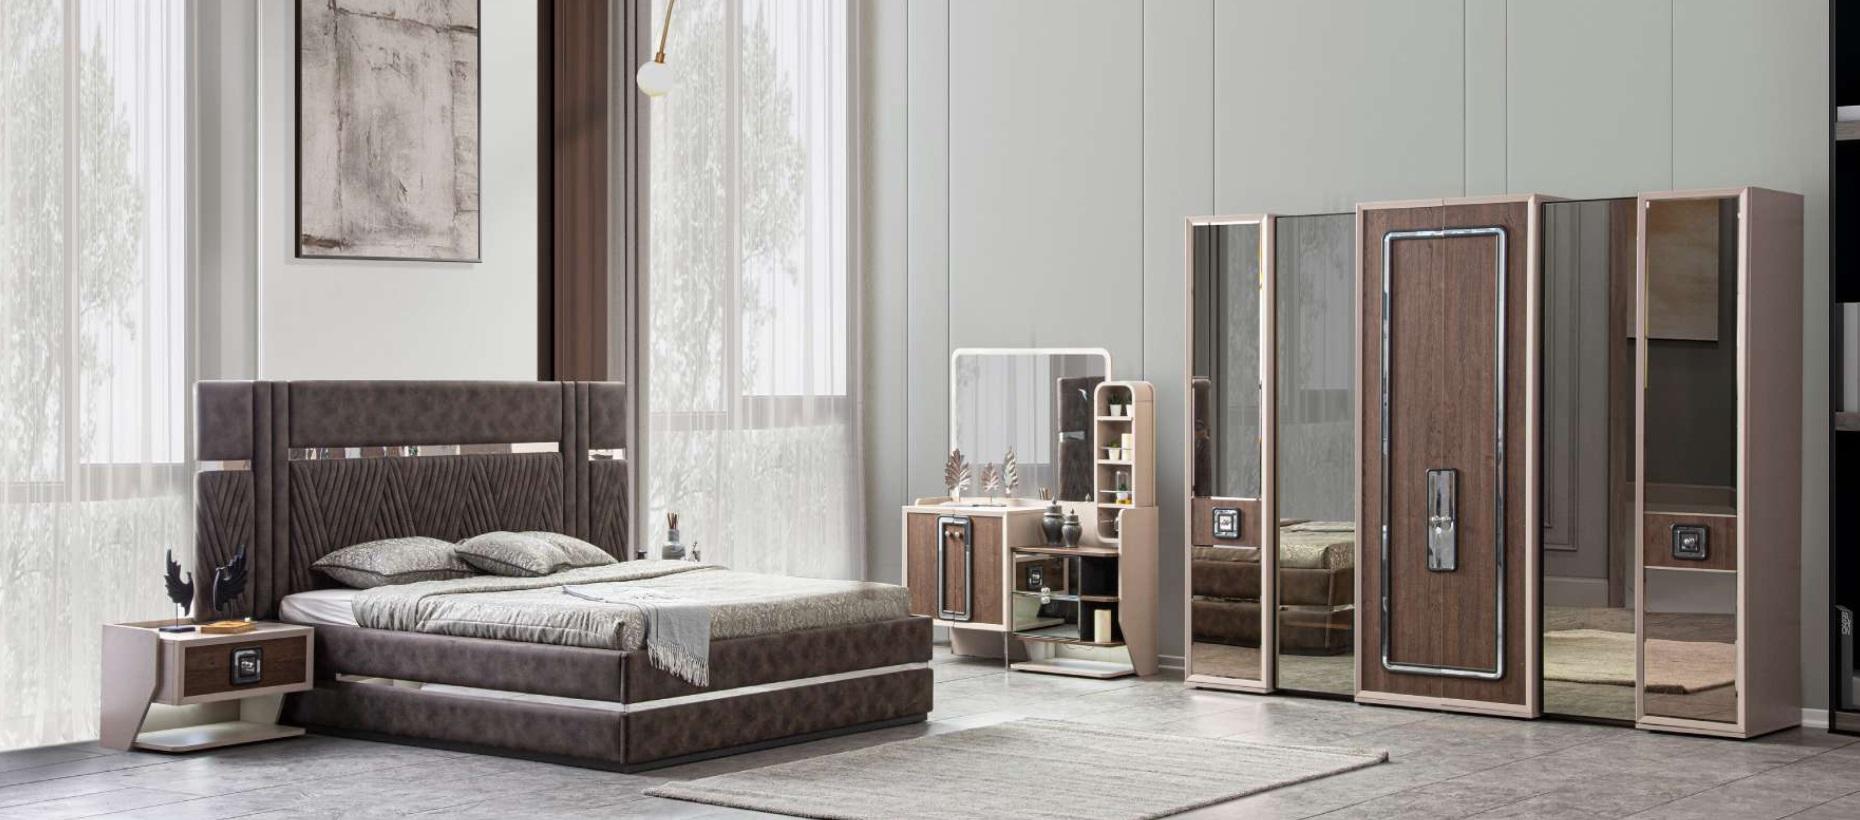 Bed 2x bedside tables 5pcs Bedroom Design Modern Luxury Furniture New